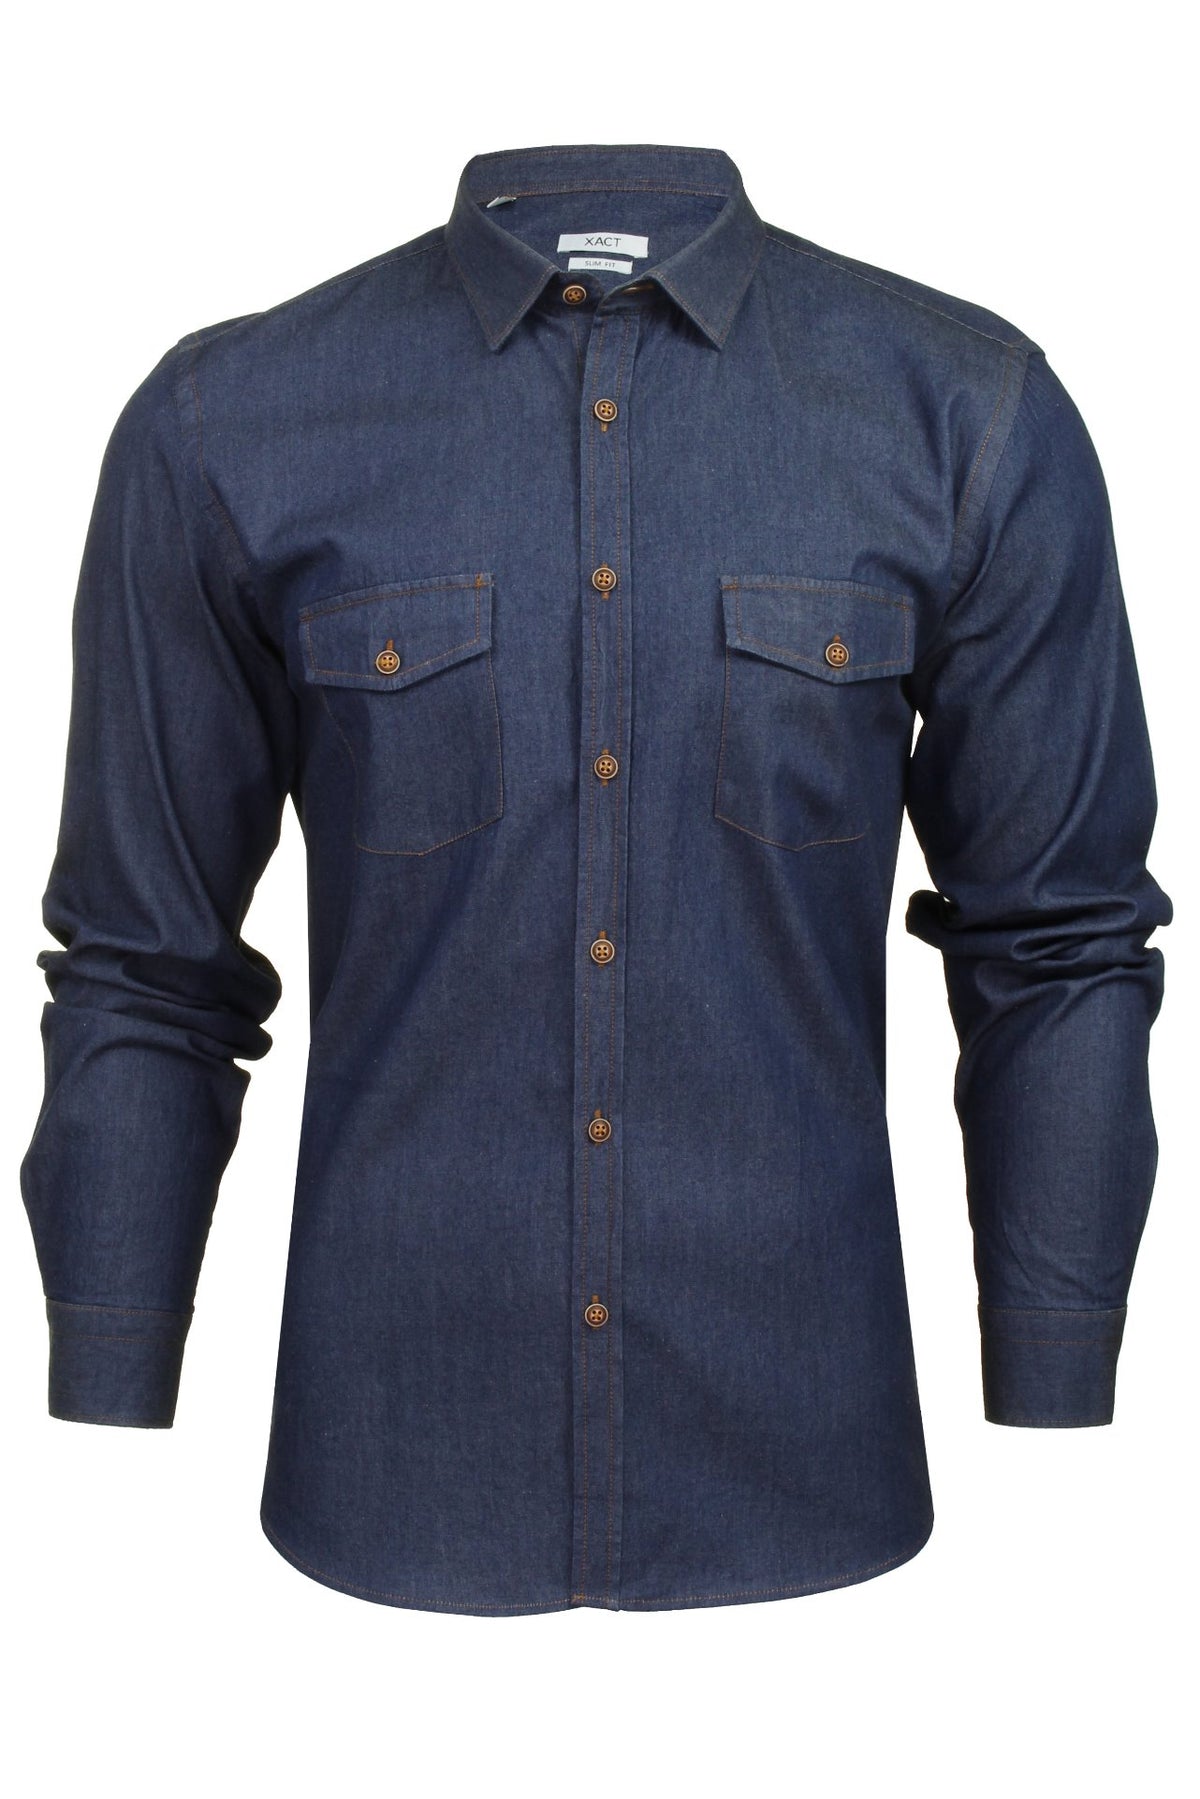 Xact Mens Long Sleeved Denim Shirt - Slim Fit, 01, Xsh1074, Navy